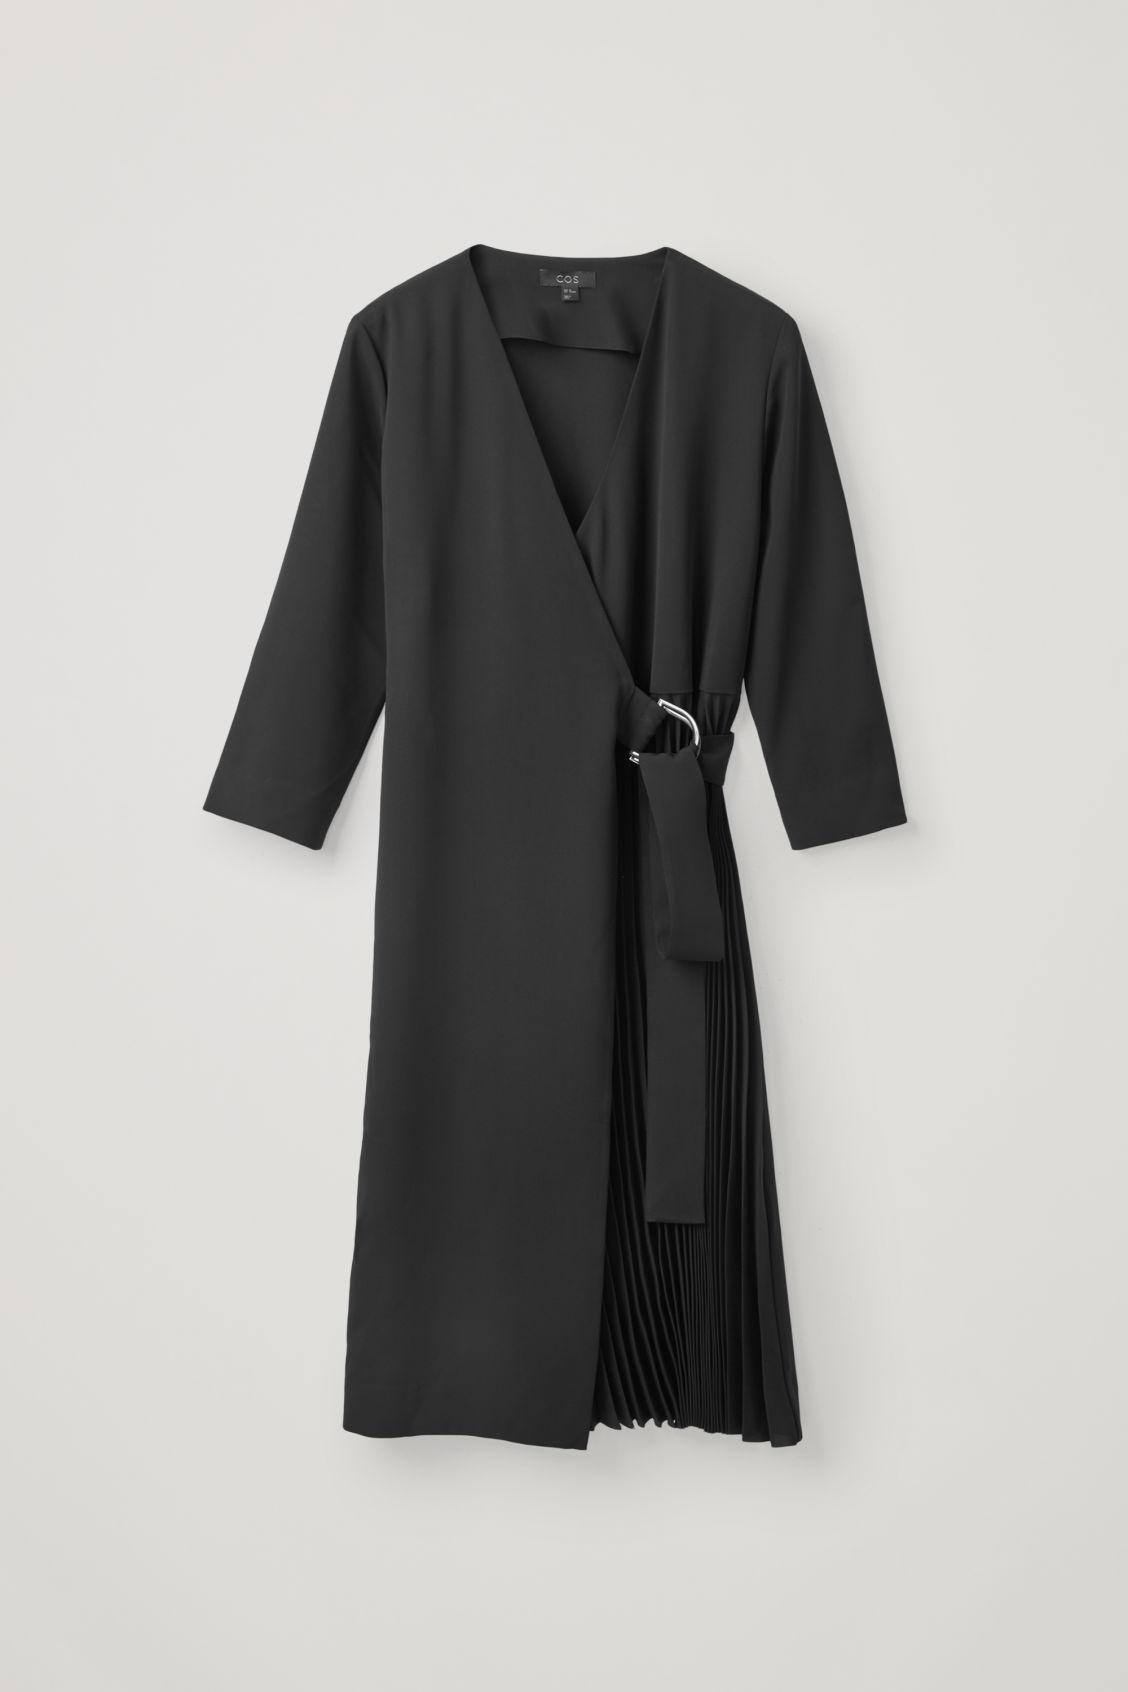 COS Pleated Wrap Dress in Black | Lyst